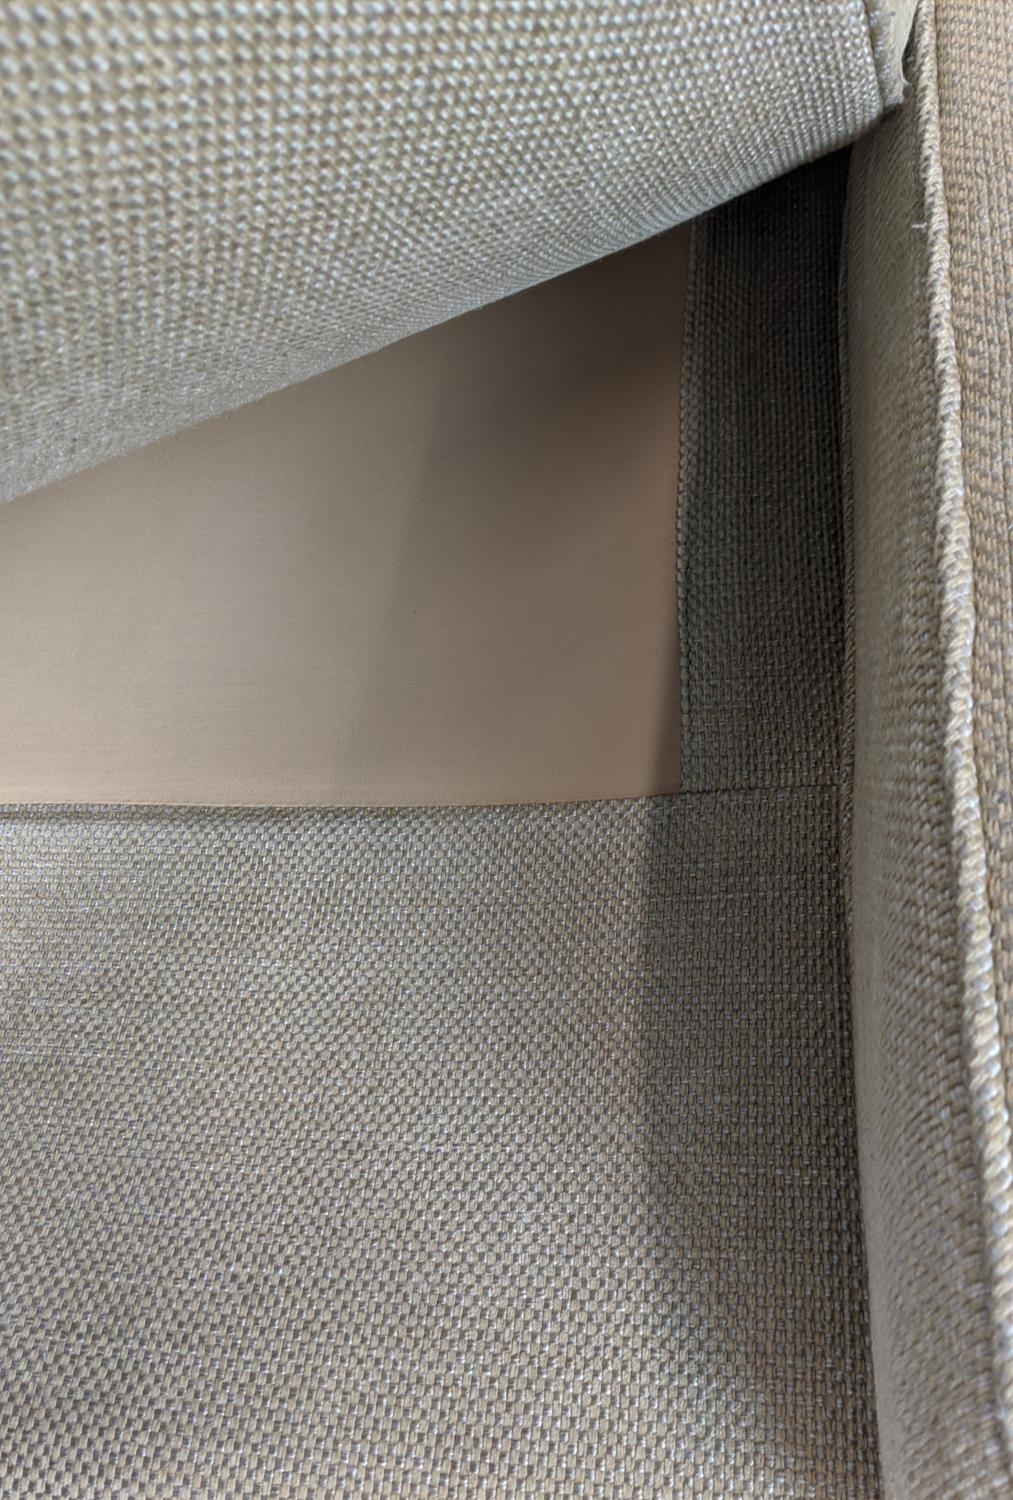 KINGCOME SHERWOOD SOFA, light brown upholstery, 181cm W x 75cm H x 95cm D. - Bild 6 aus 7